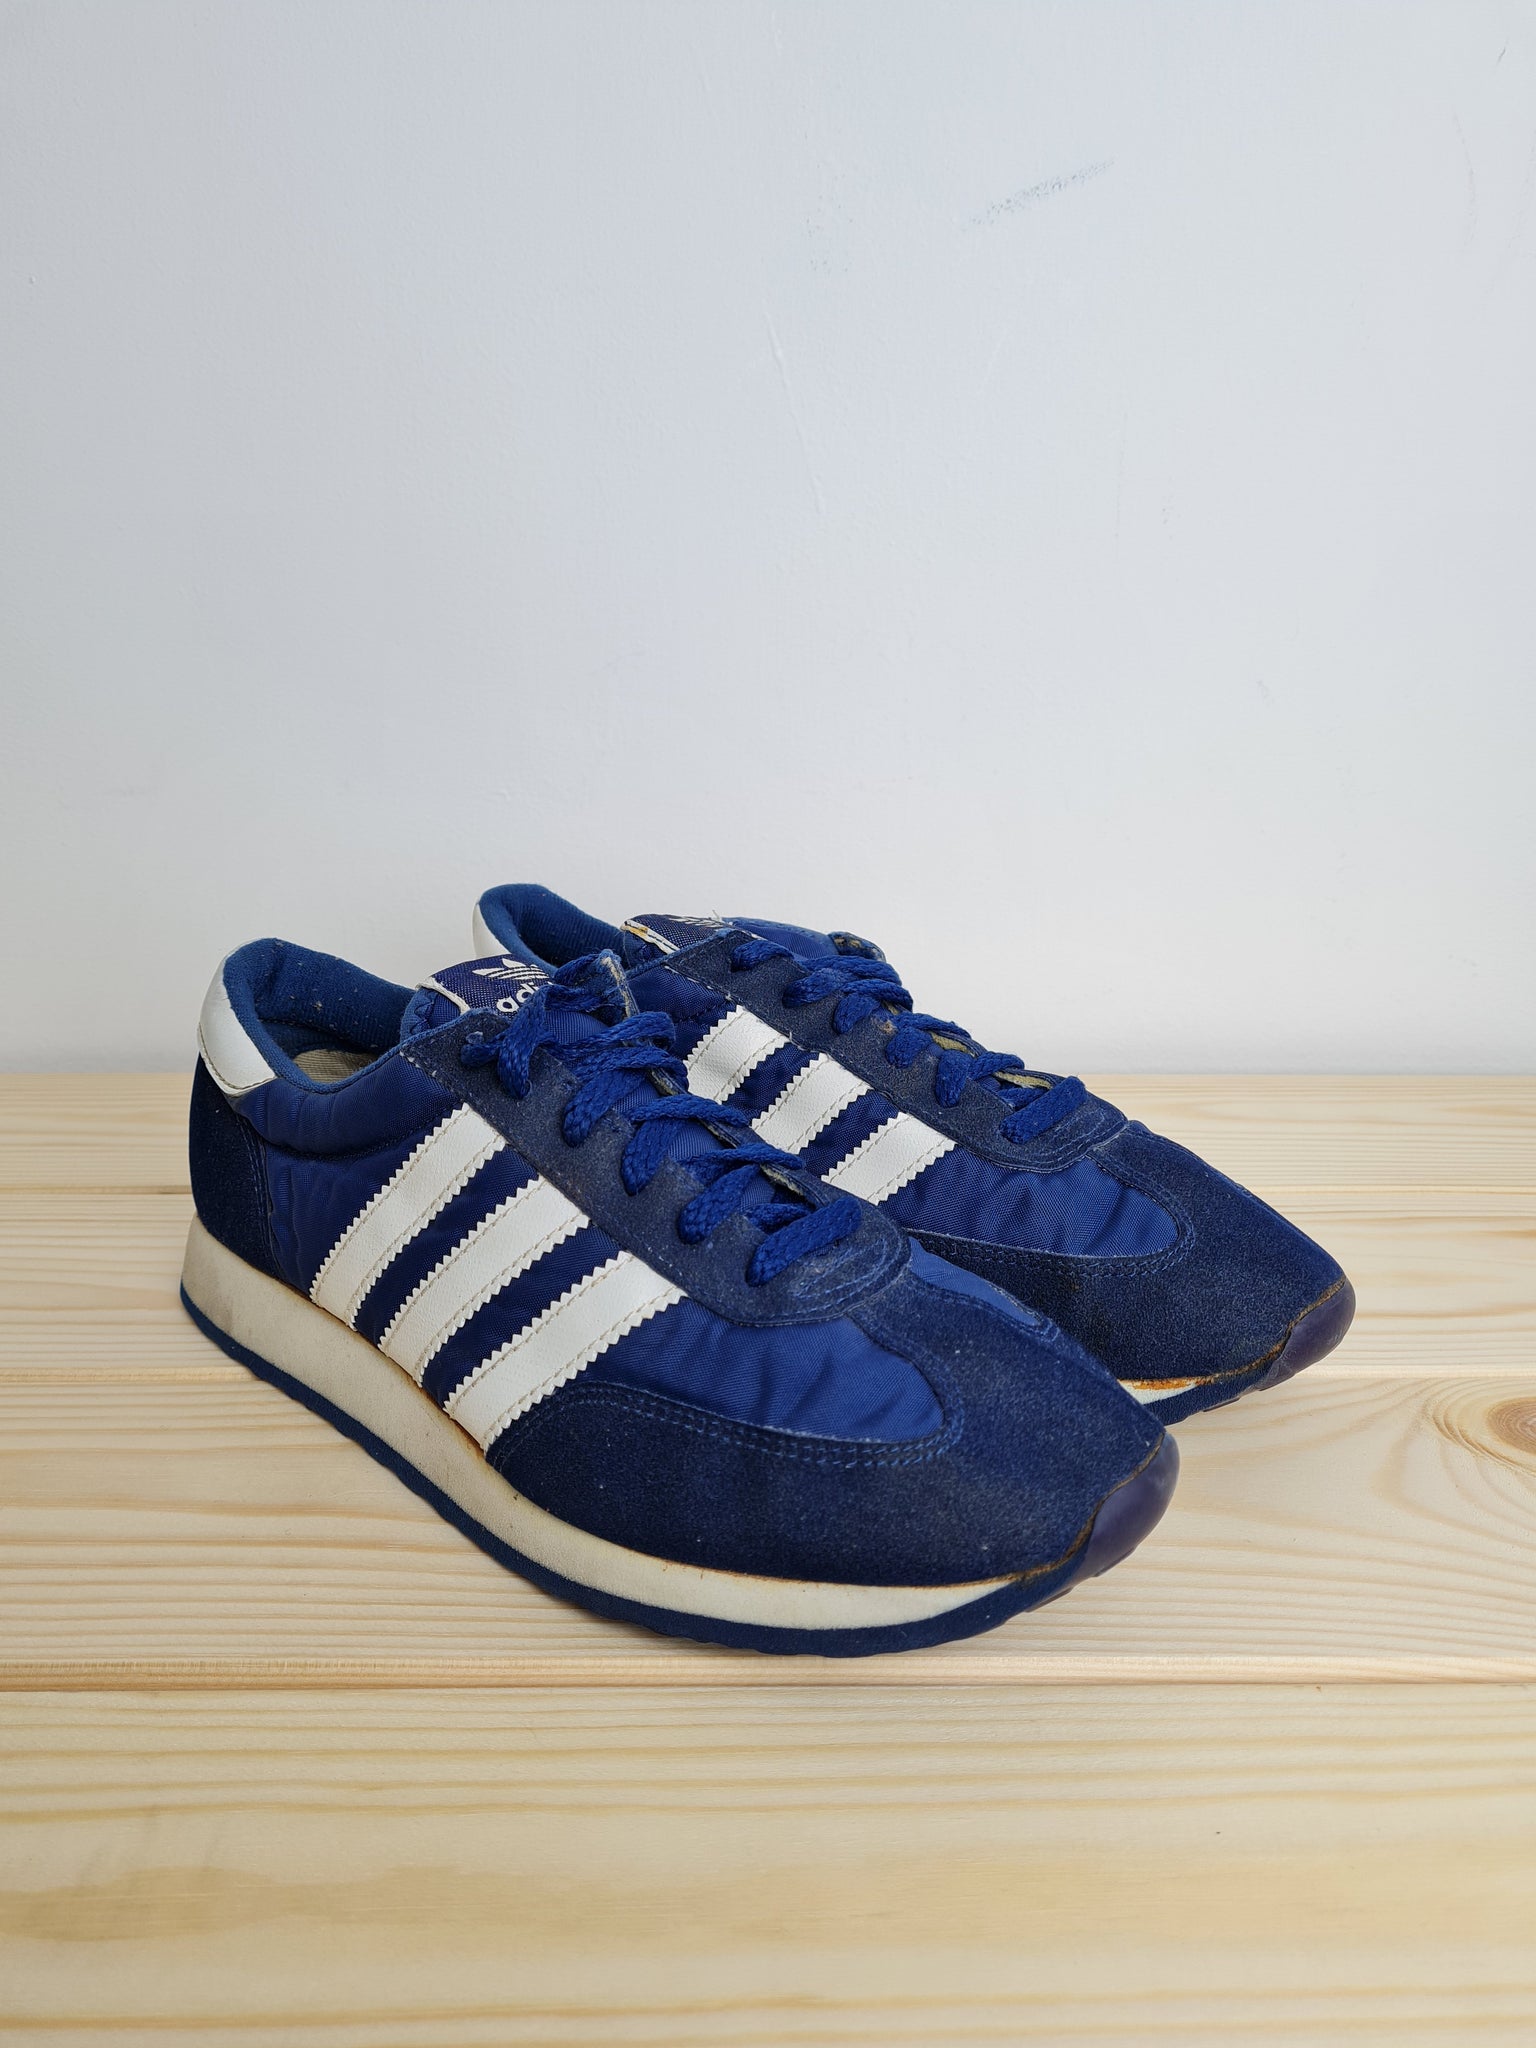 Adidas Nevada UK 5.5 vintage trainers blue/white – classics